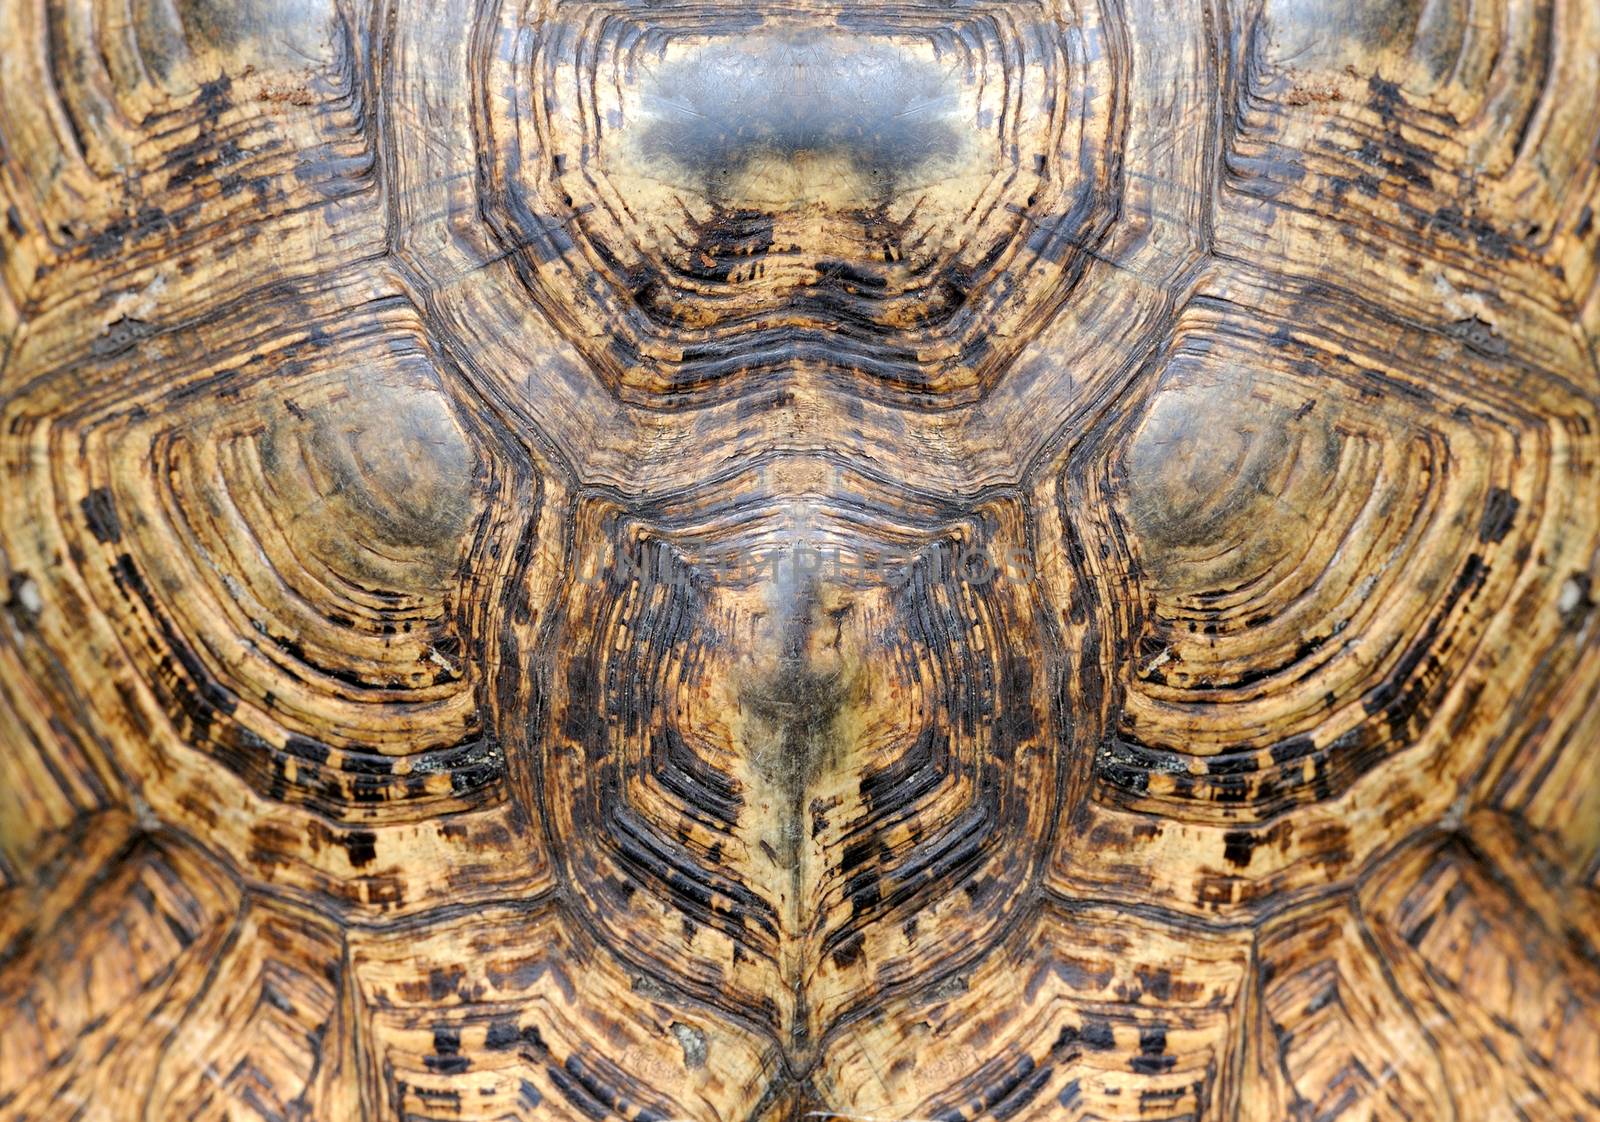 Turtle carapace by byrdyak